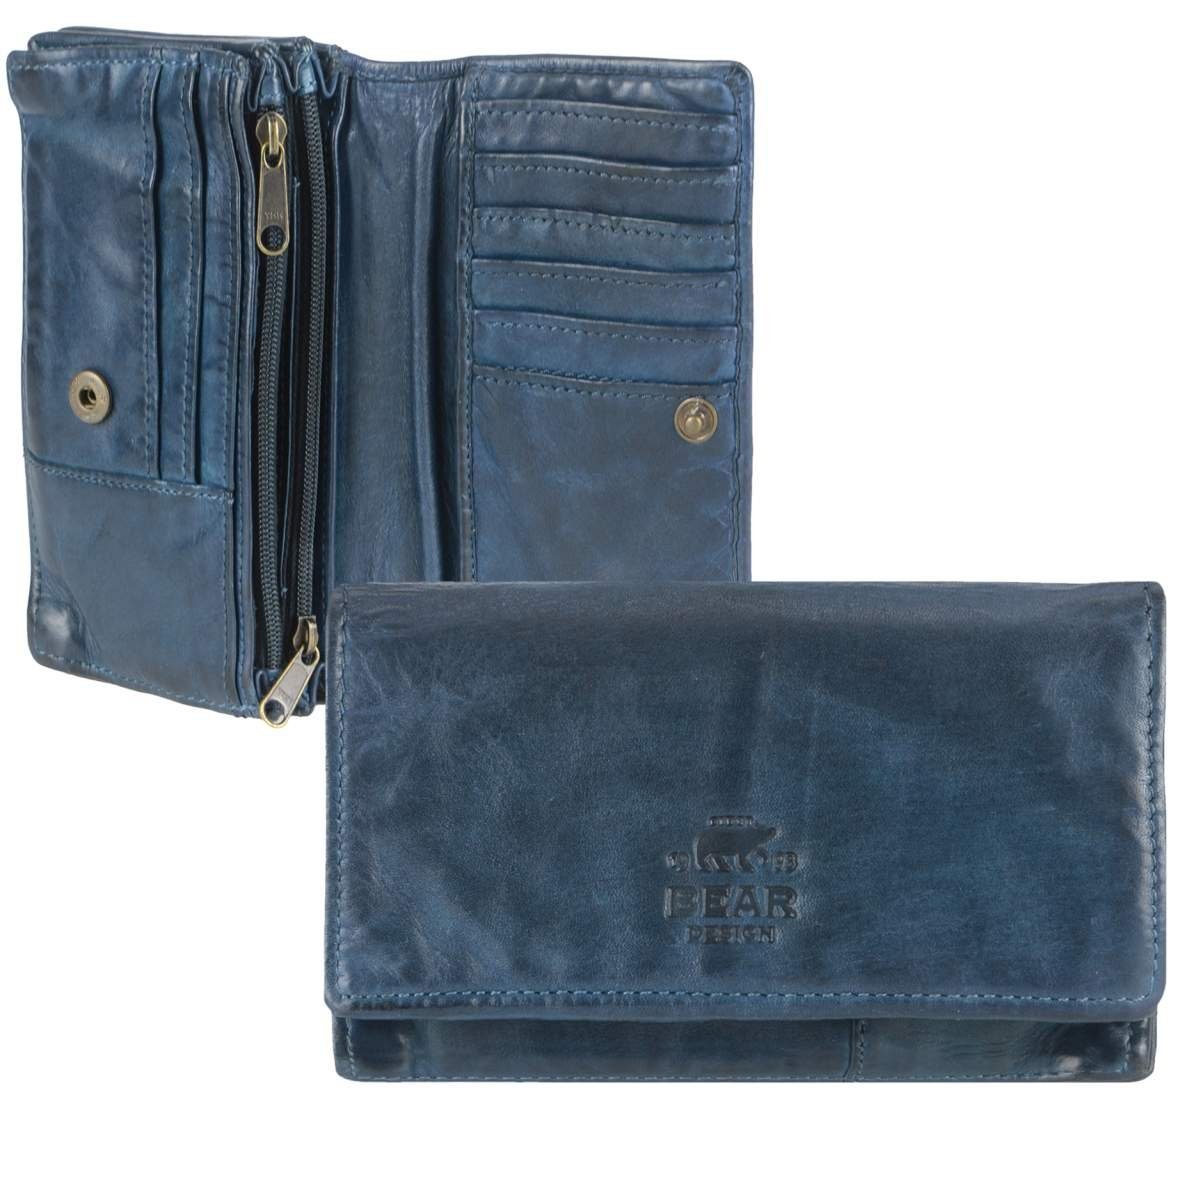 Bear Design Geldbörse Emma, Damenbörse, Portemonnaie, Leder in blau, 14 Kartenfächer, 15x9cm